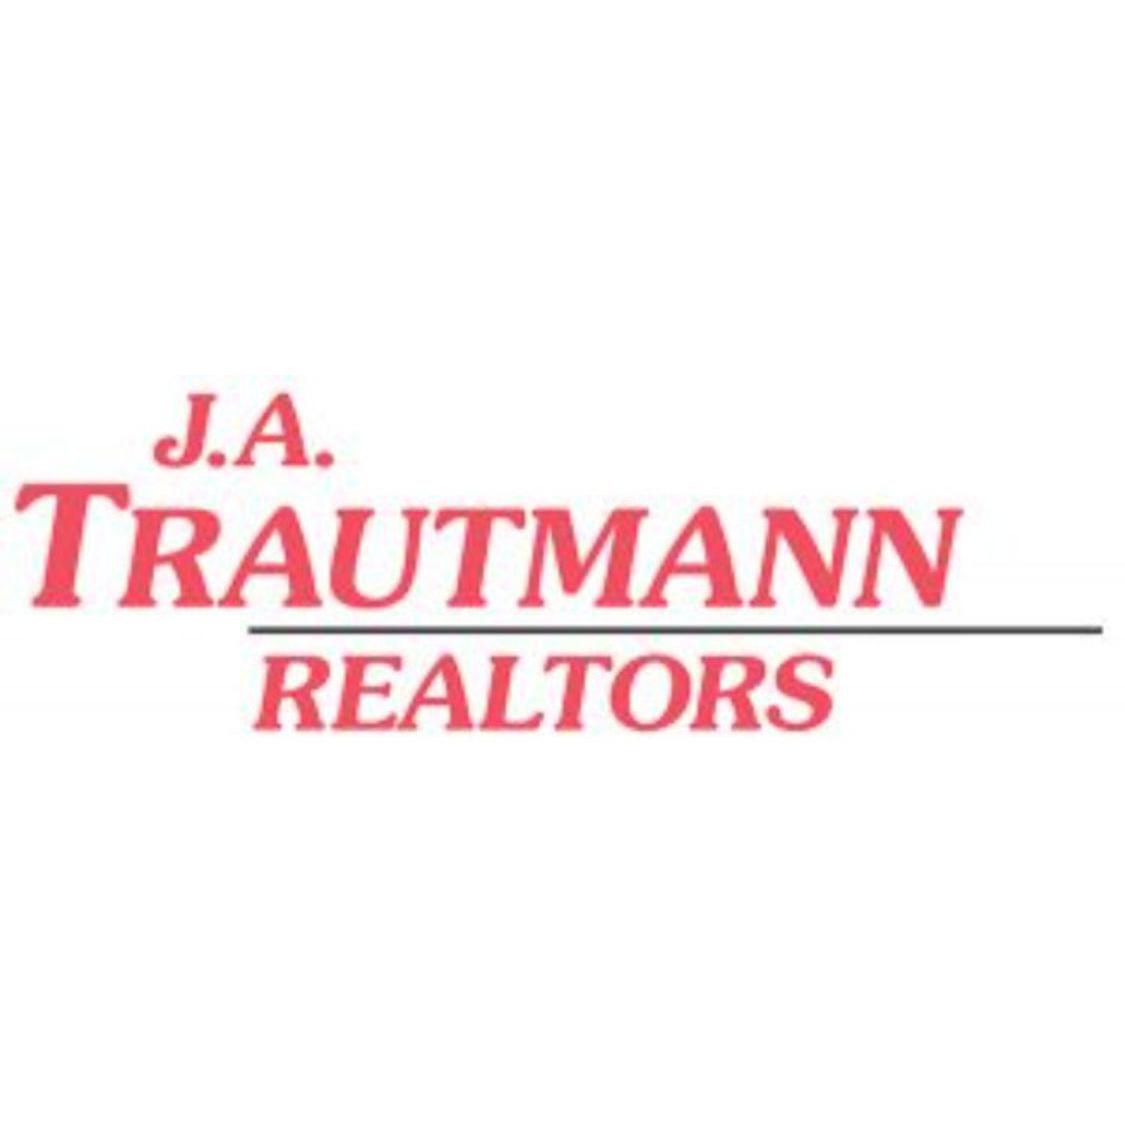 J.A. Trautmann Realtors Cincinnati (513)752-5000